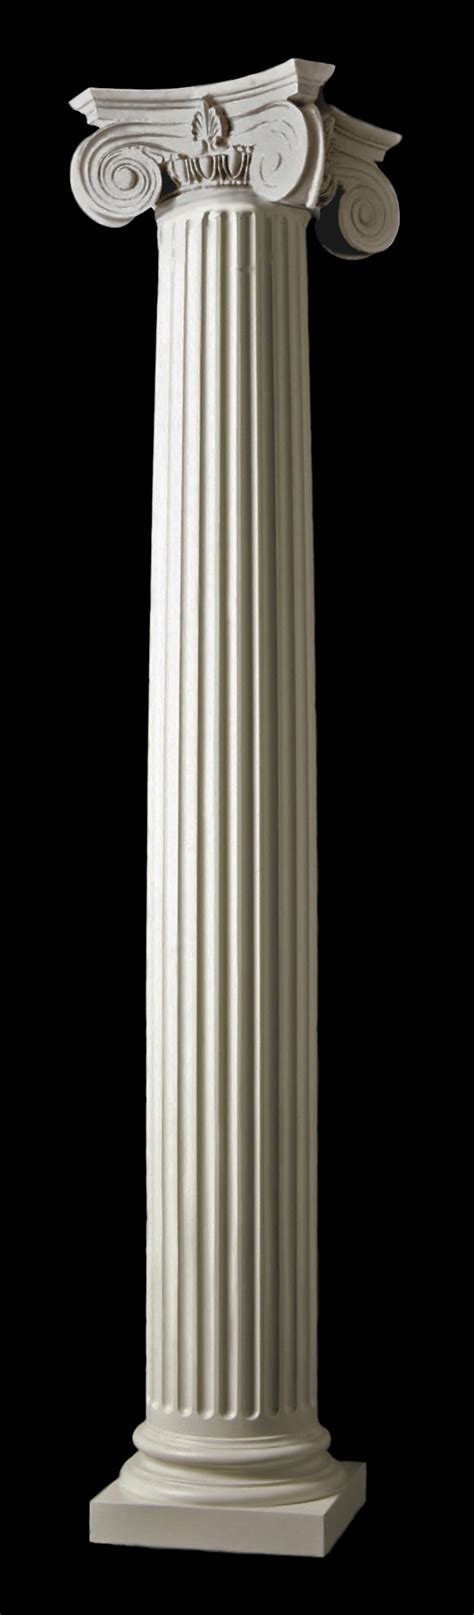 empire wood columns attic base chadsworths   columns